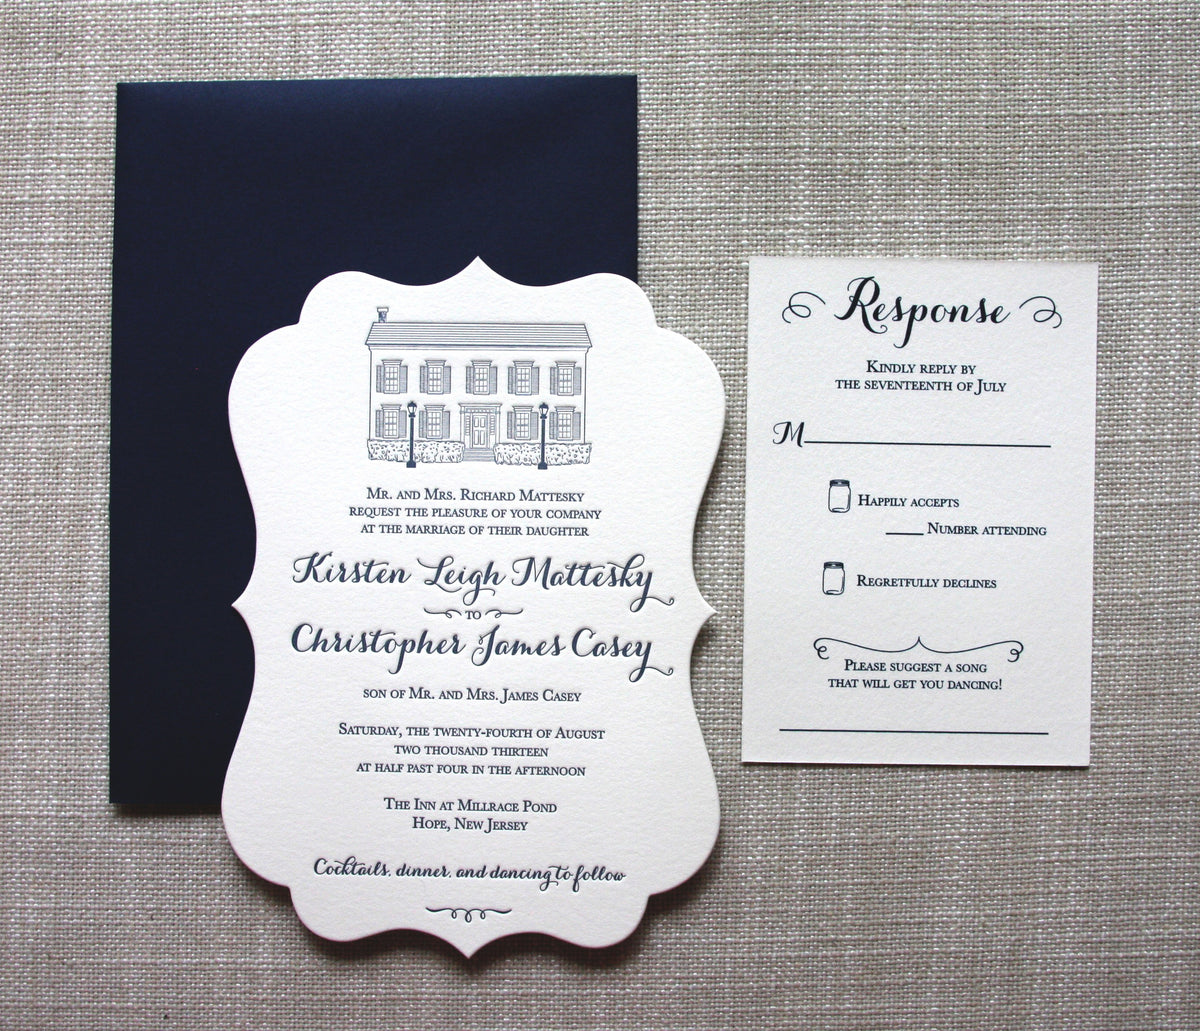 Inn at Millrace Pond Letterpress Wedding Invitation by Scotti Cline Designs